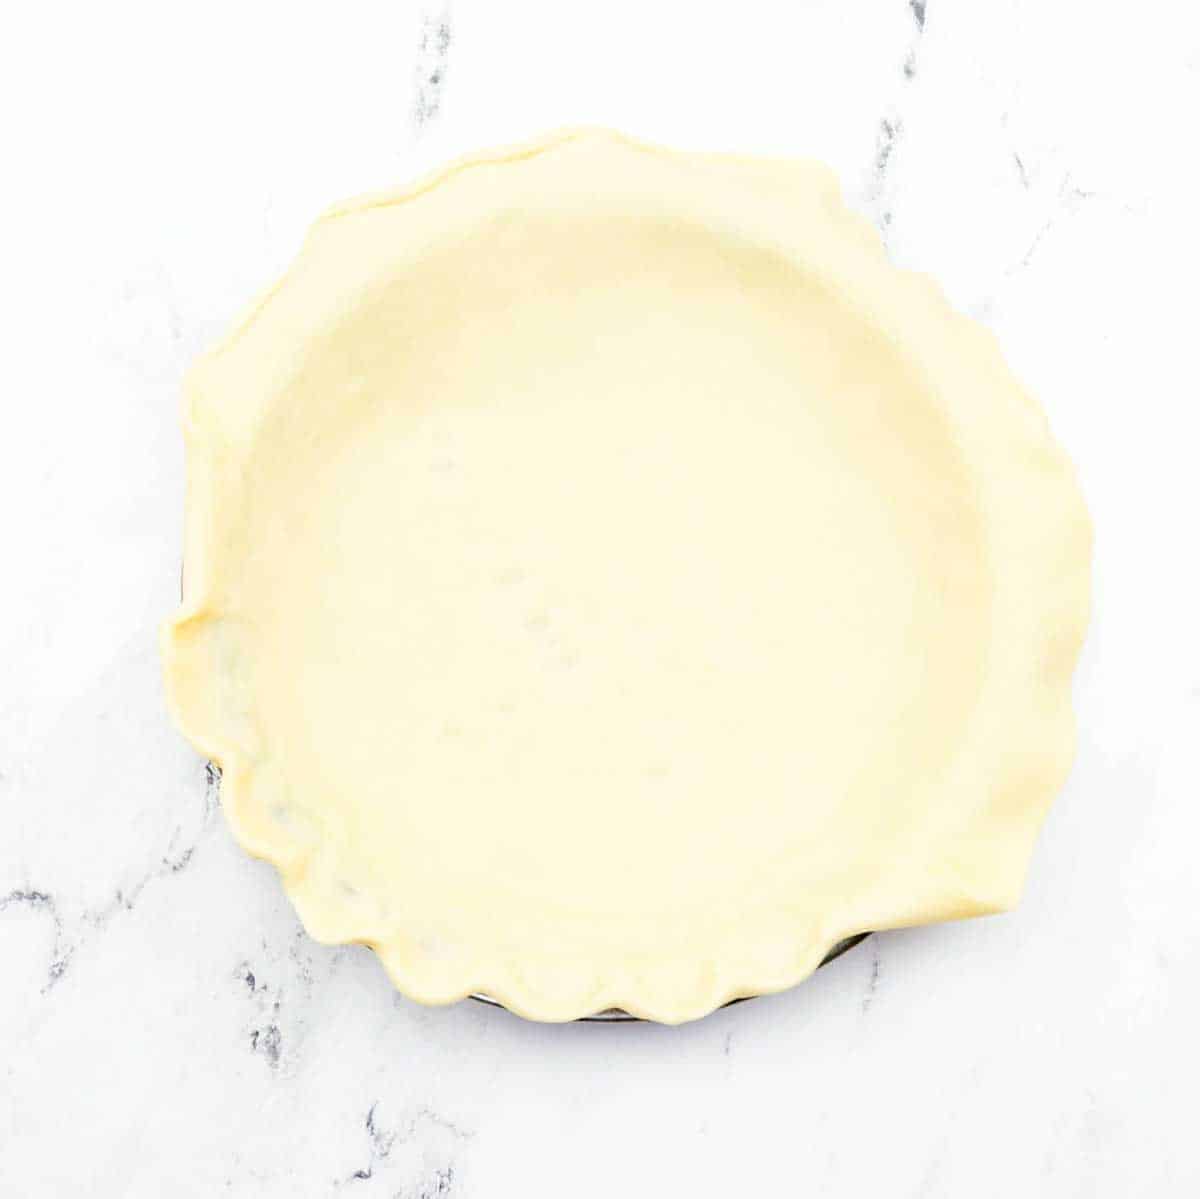 pie crust before adding filling